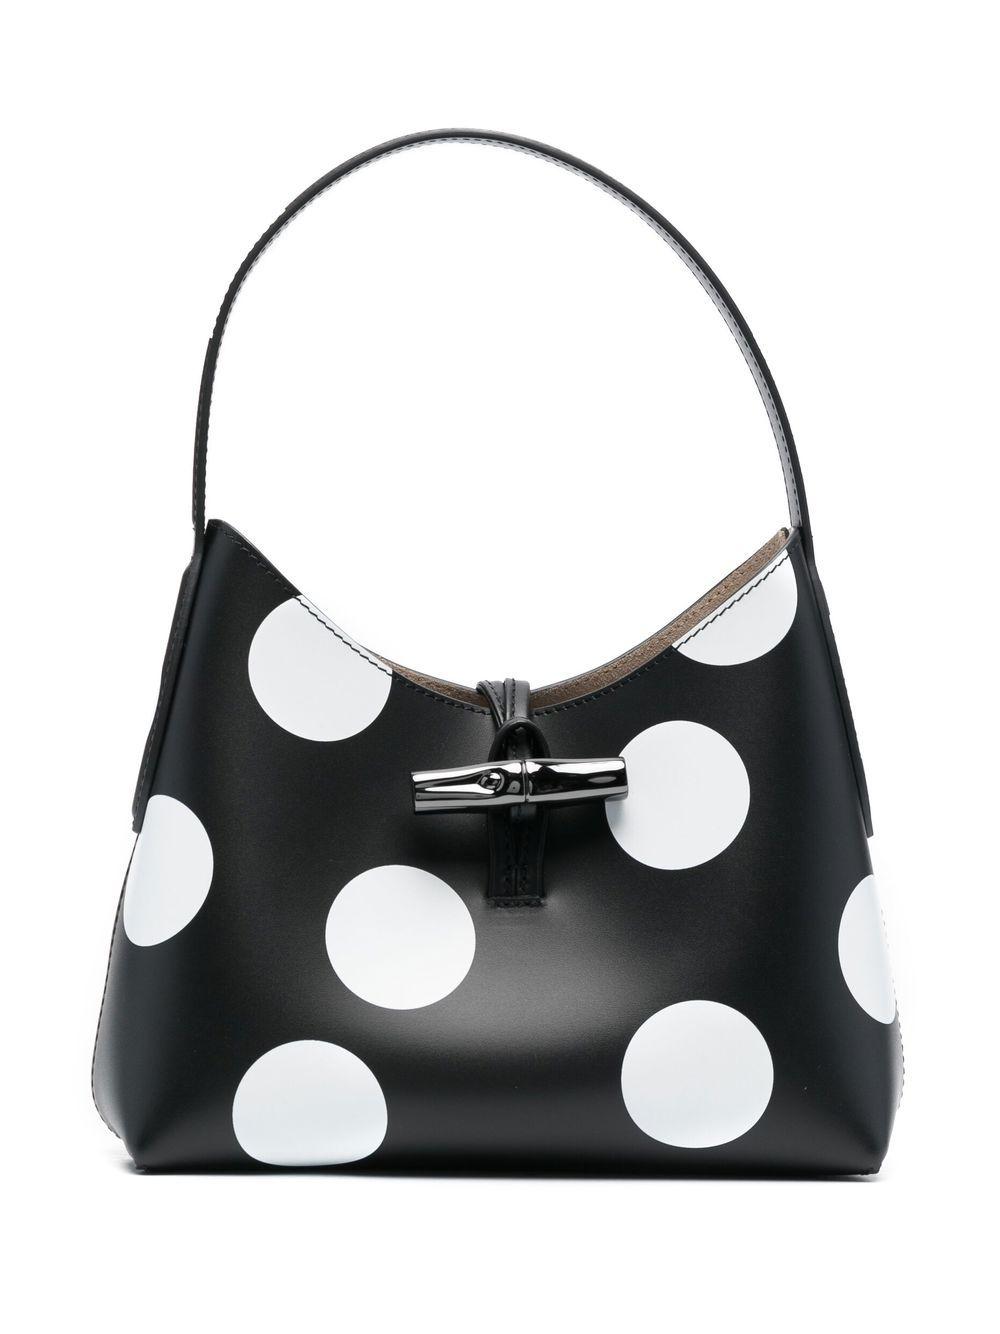 JL Penha - Roseau Shoulder Bag from Longchamp features a pebbled